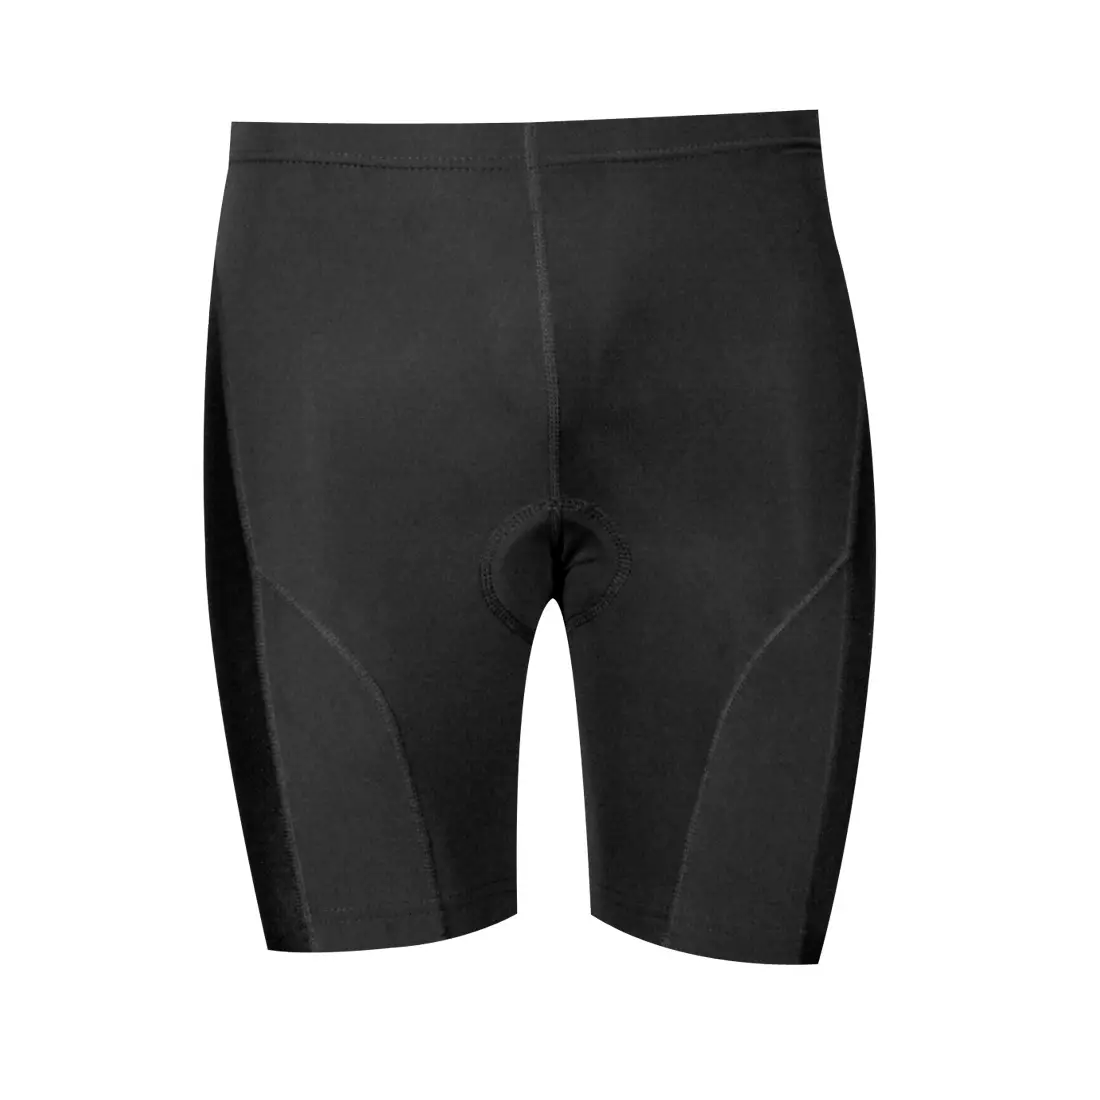 NEWLINE BIKE SHORTS - men's cycling shorts, Comfort Zone insert 21755-060